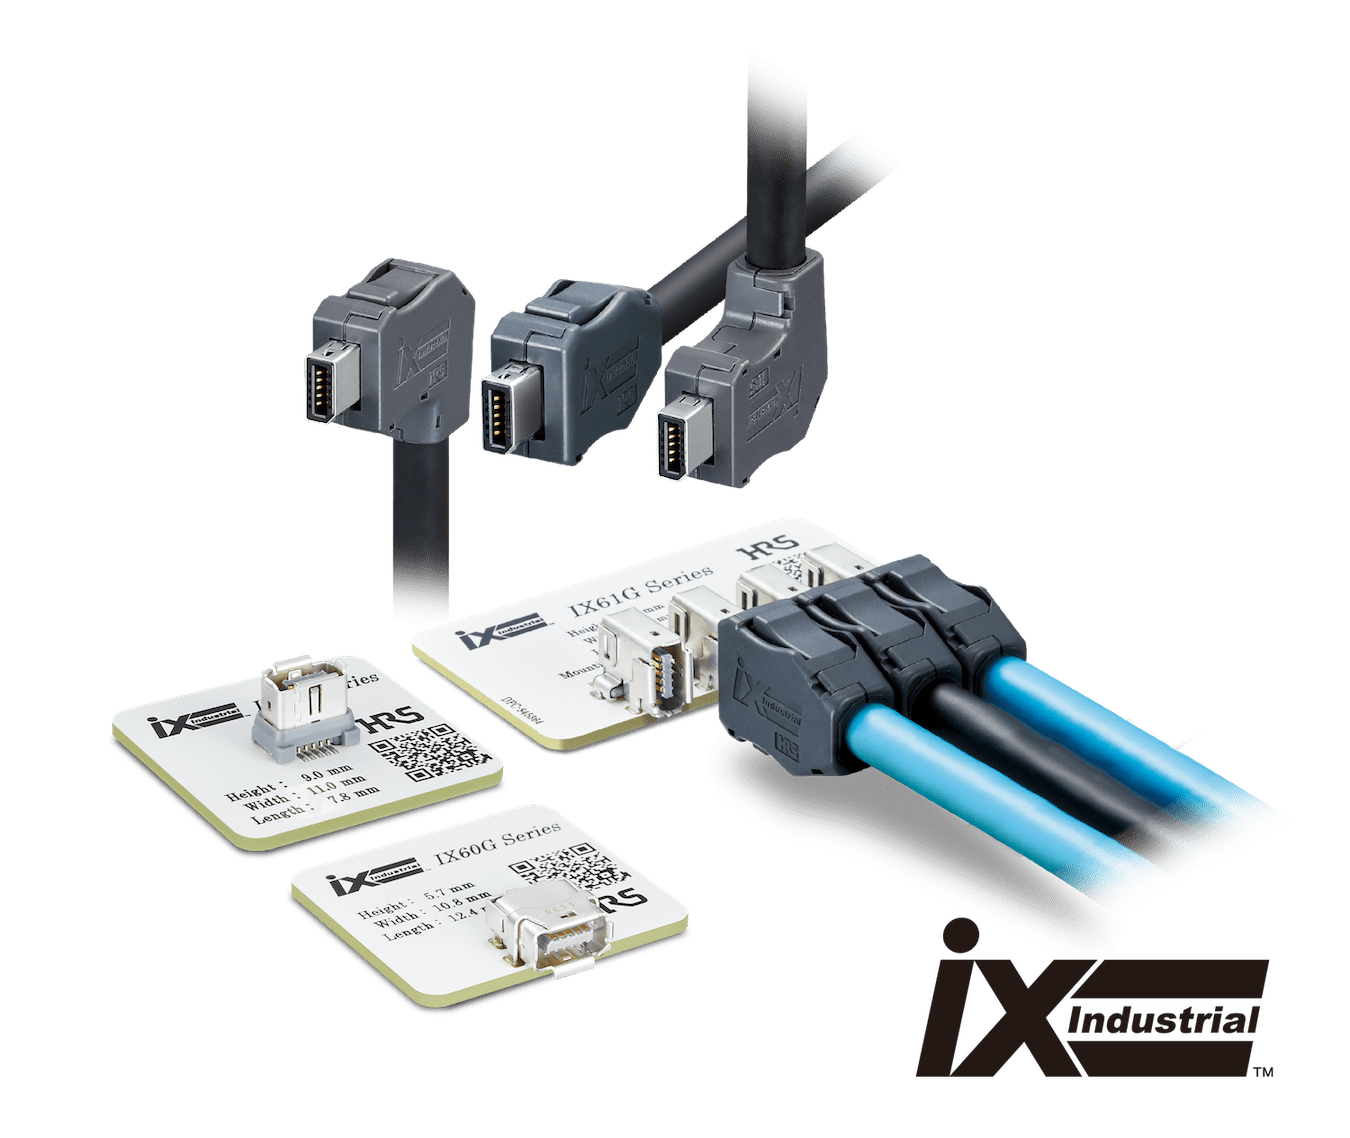 Hirose ix Industrial connector series